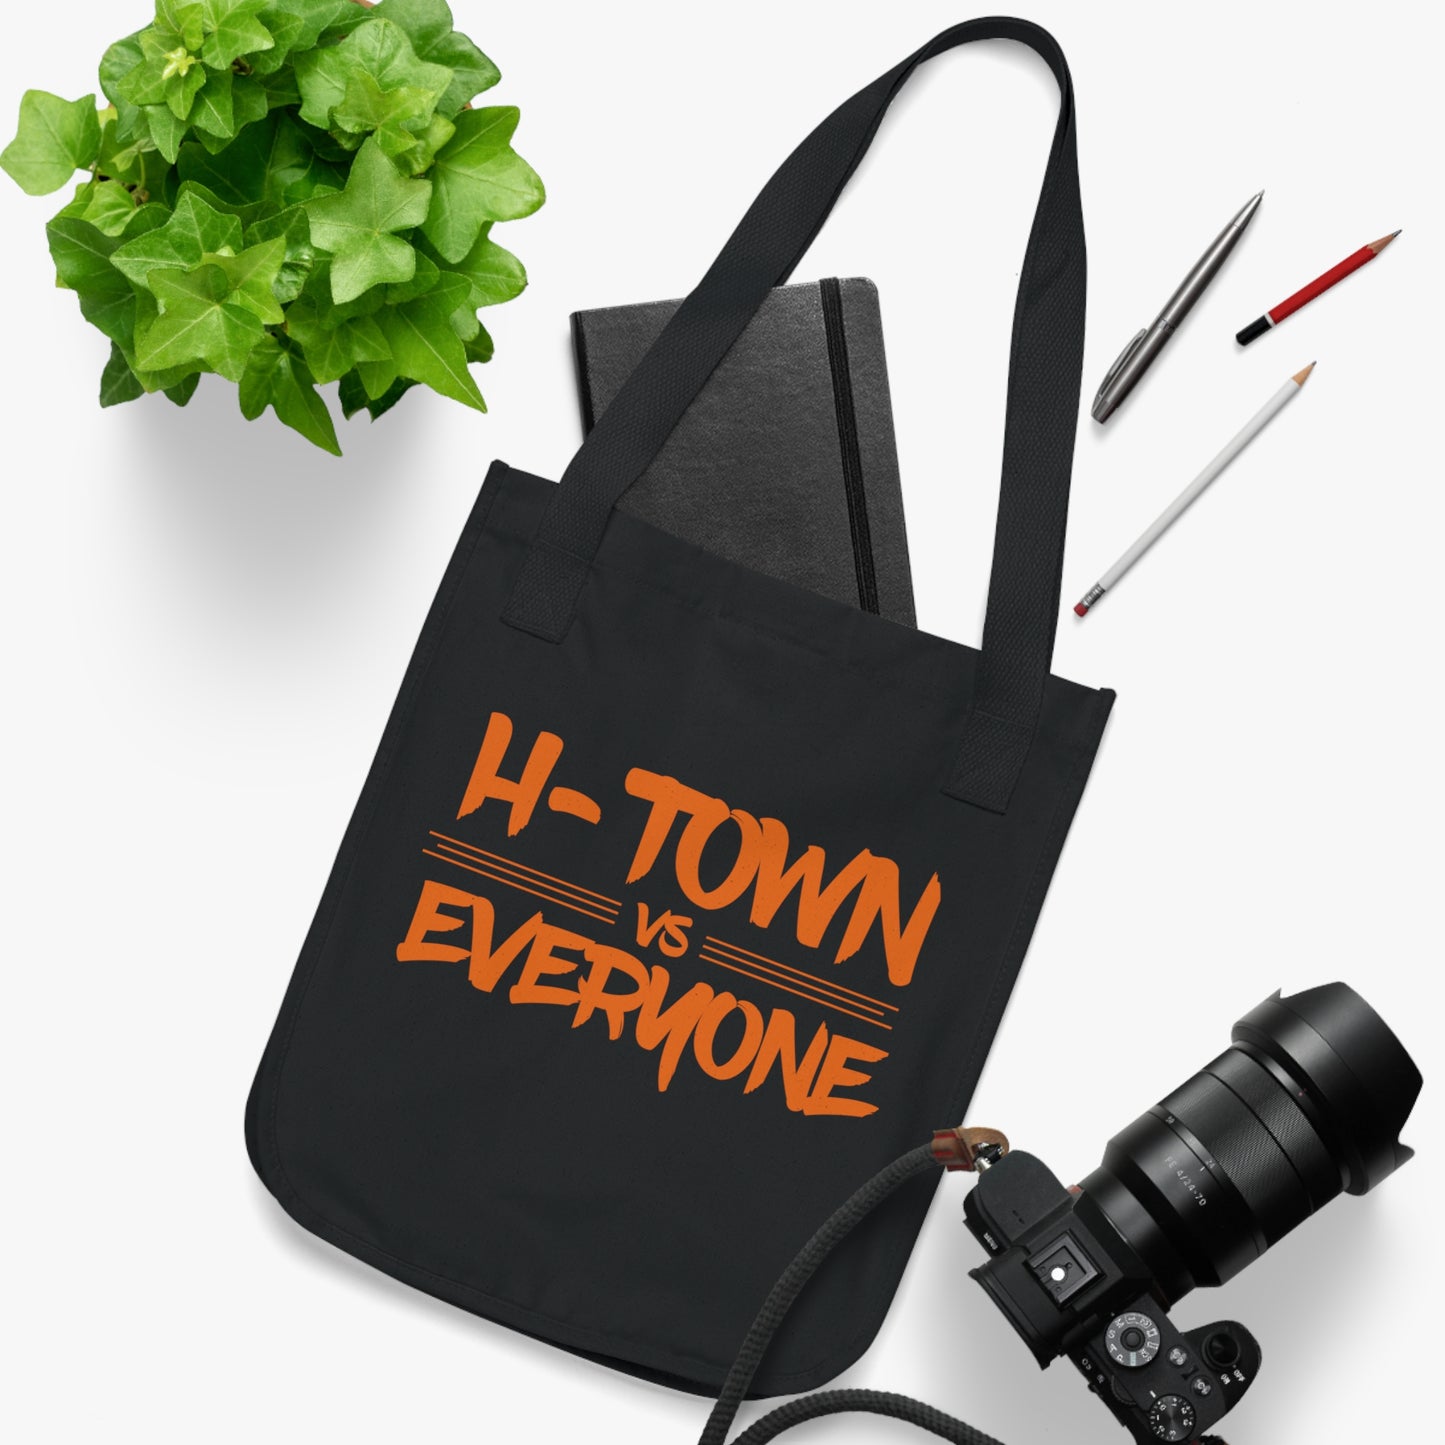 H-Town vs Everyone Canvas Tote Bag